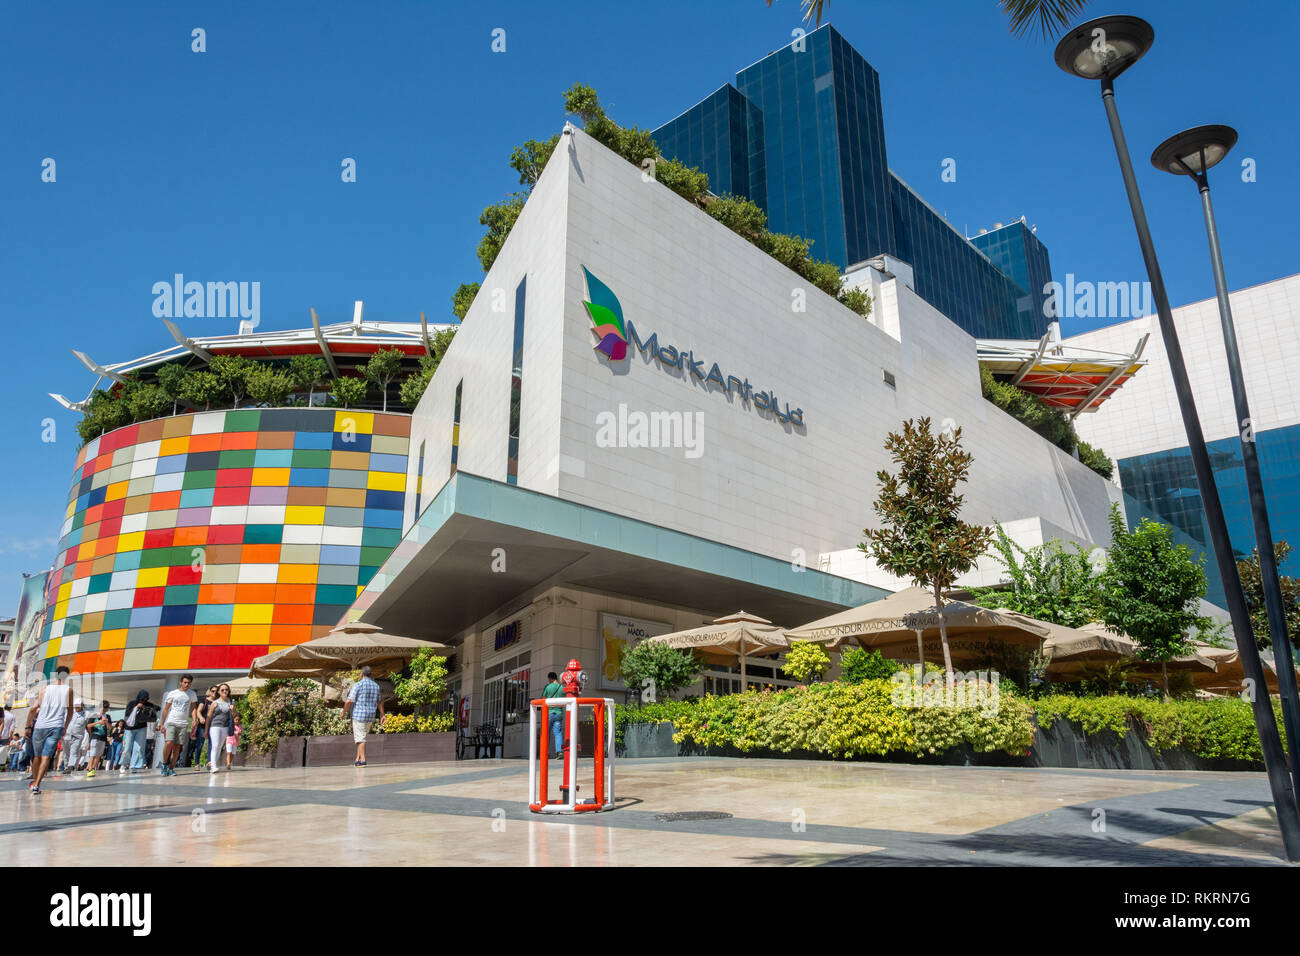 Antalya, Turkey - August 31, 2016. Mark Antalya shopping center in Antalya, Turkey, with people. Stock Photo